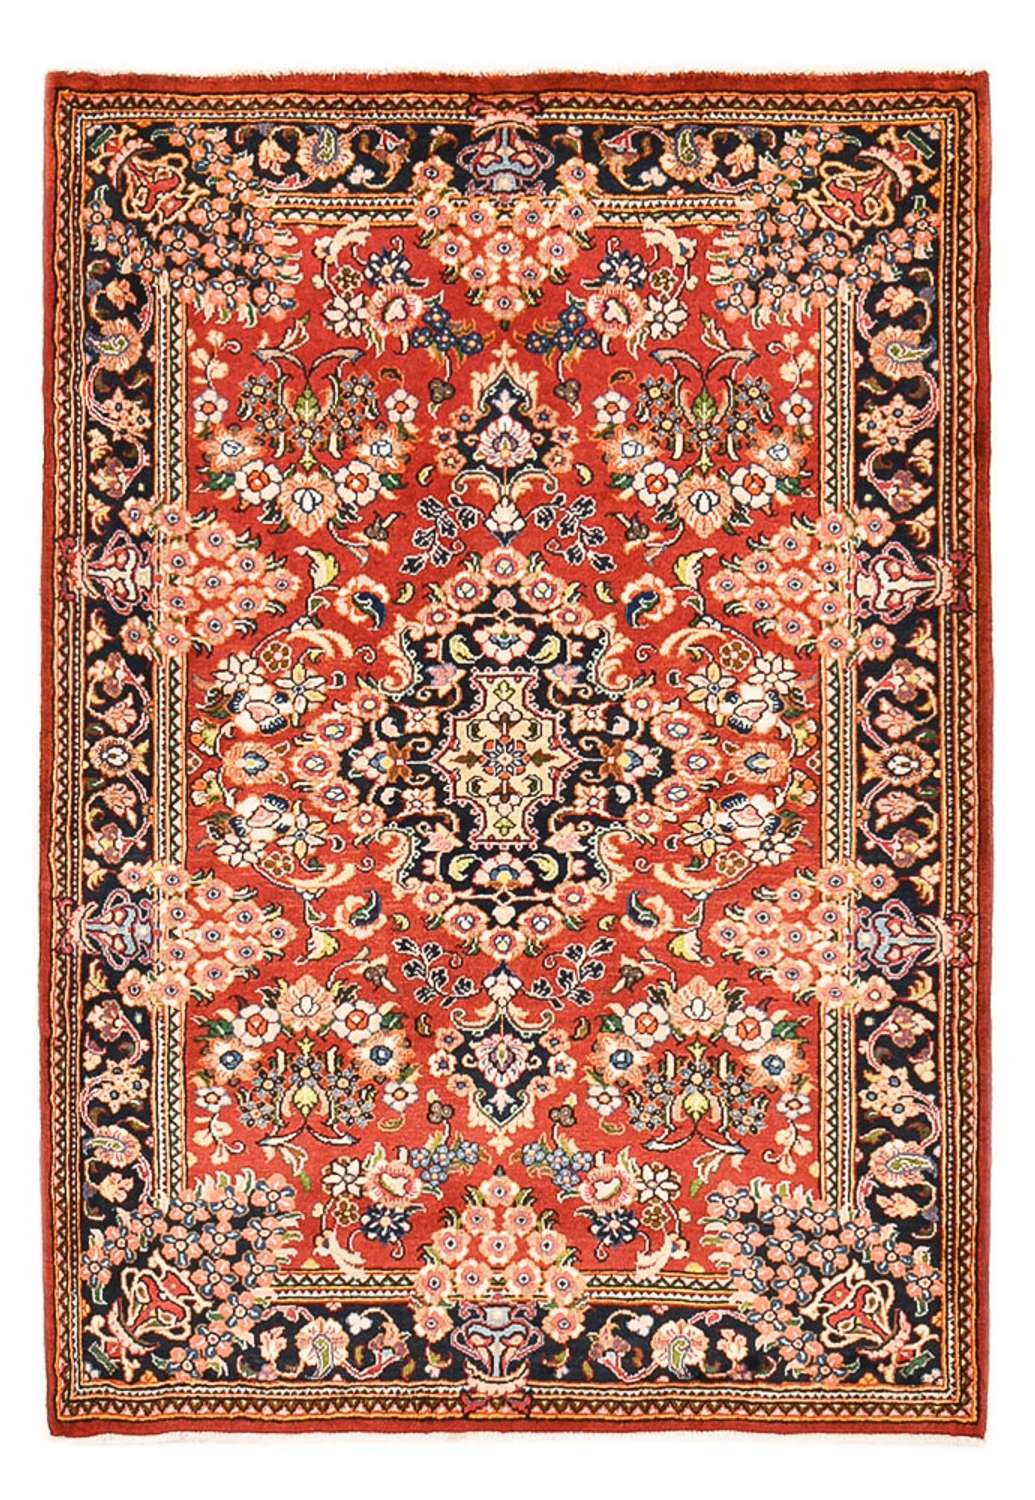 Tapis persan - Keshan - 146 x 102 cm - rouge